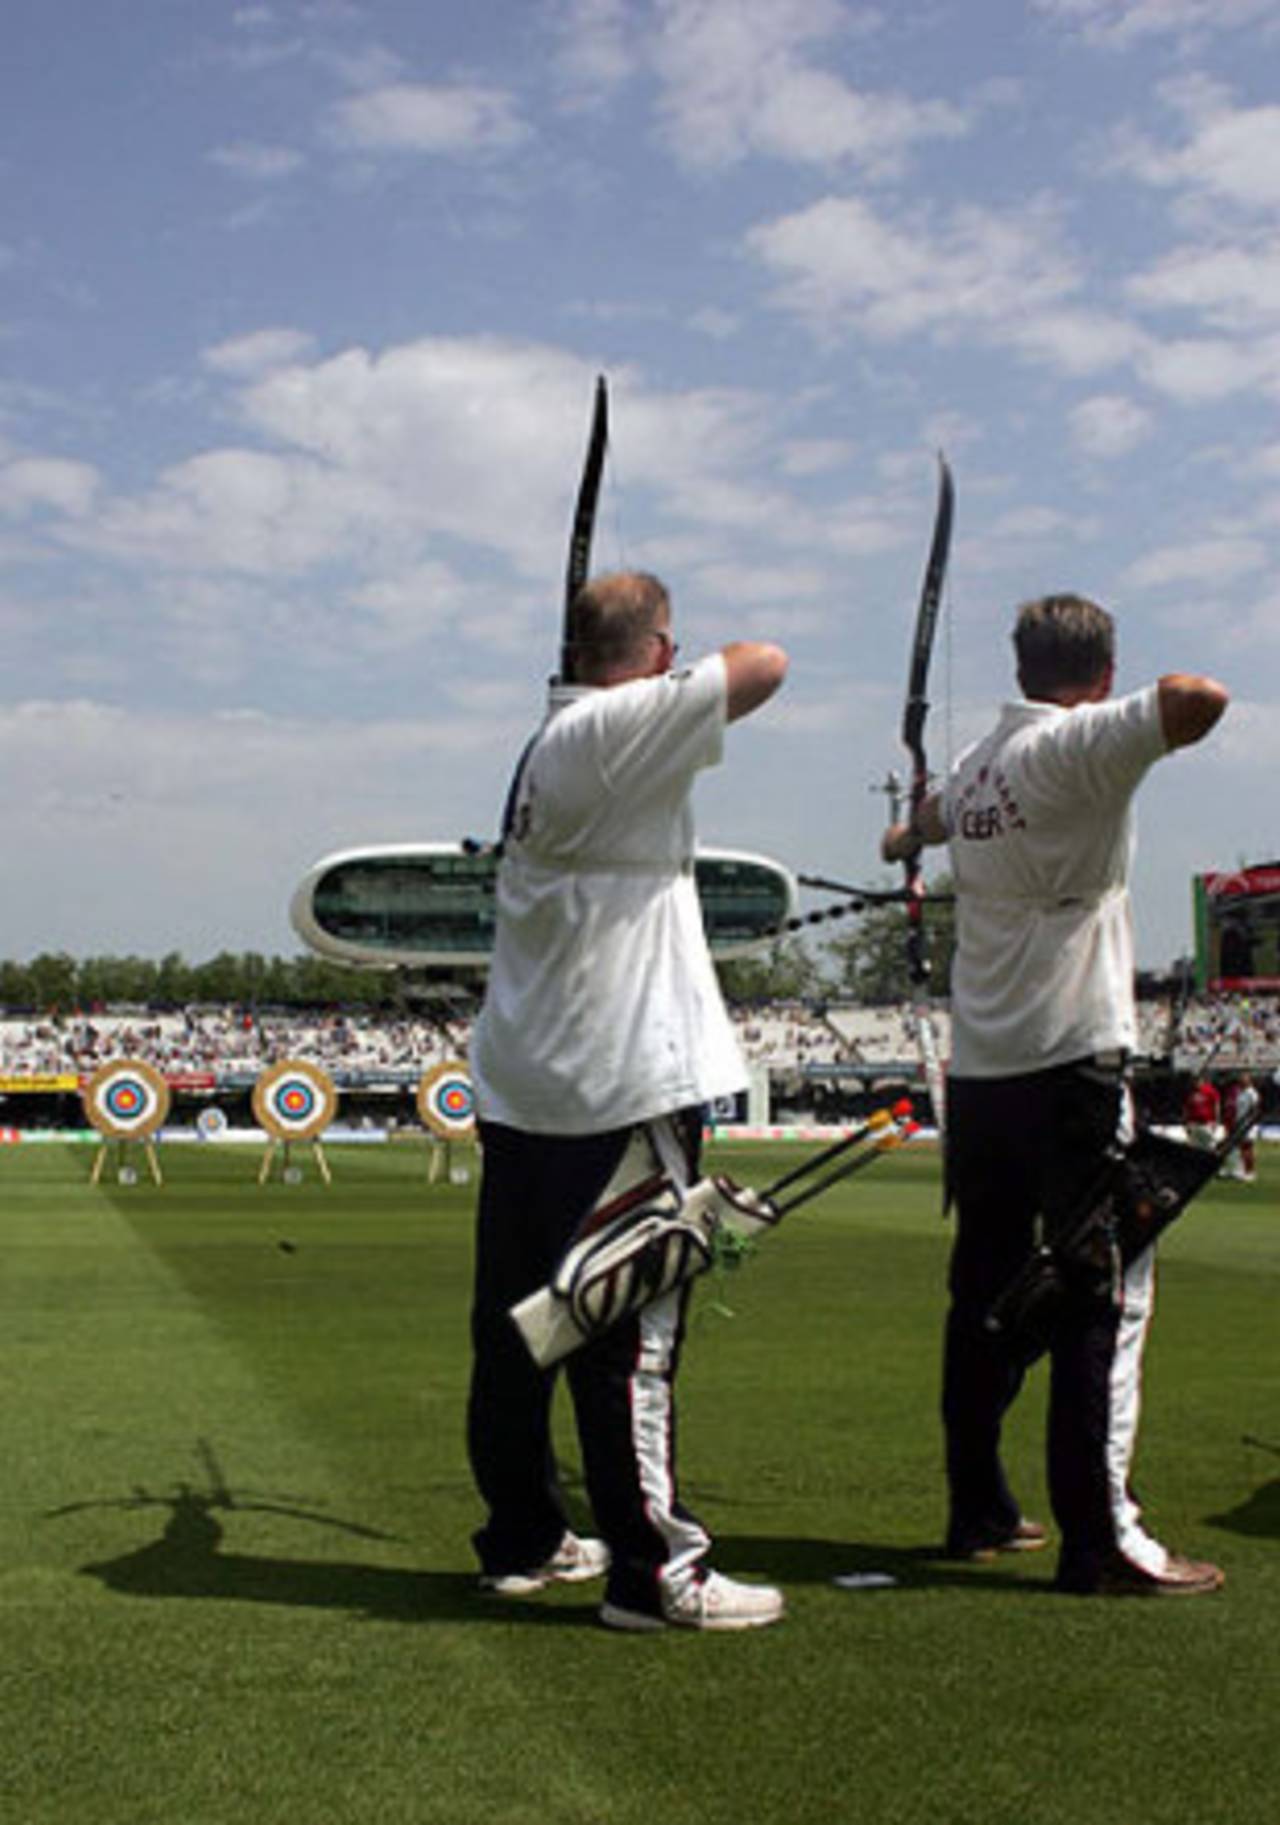 Nice shot: Lord's will host archery during the 2012 Olympics&nbsp;&nbsp;&bull;&nbsp;&nbsp;Marylebone Cricket Club